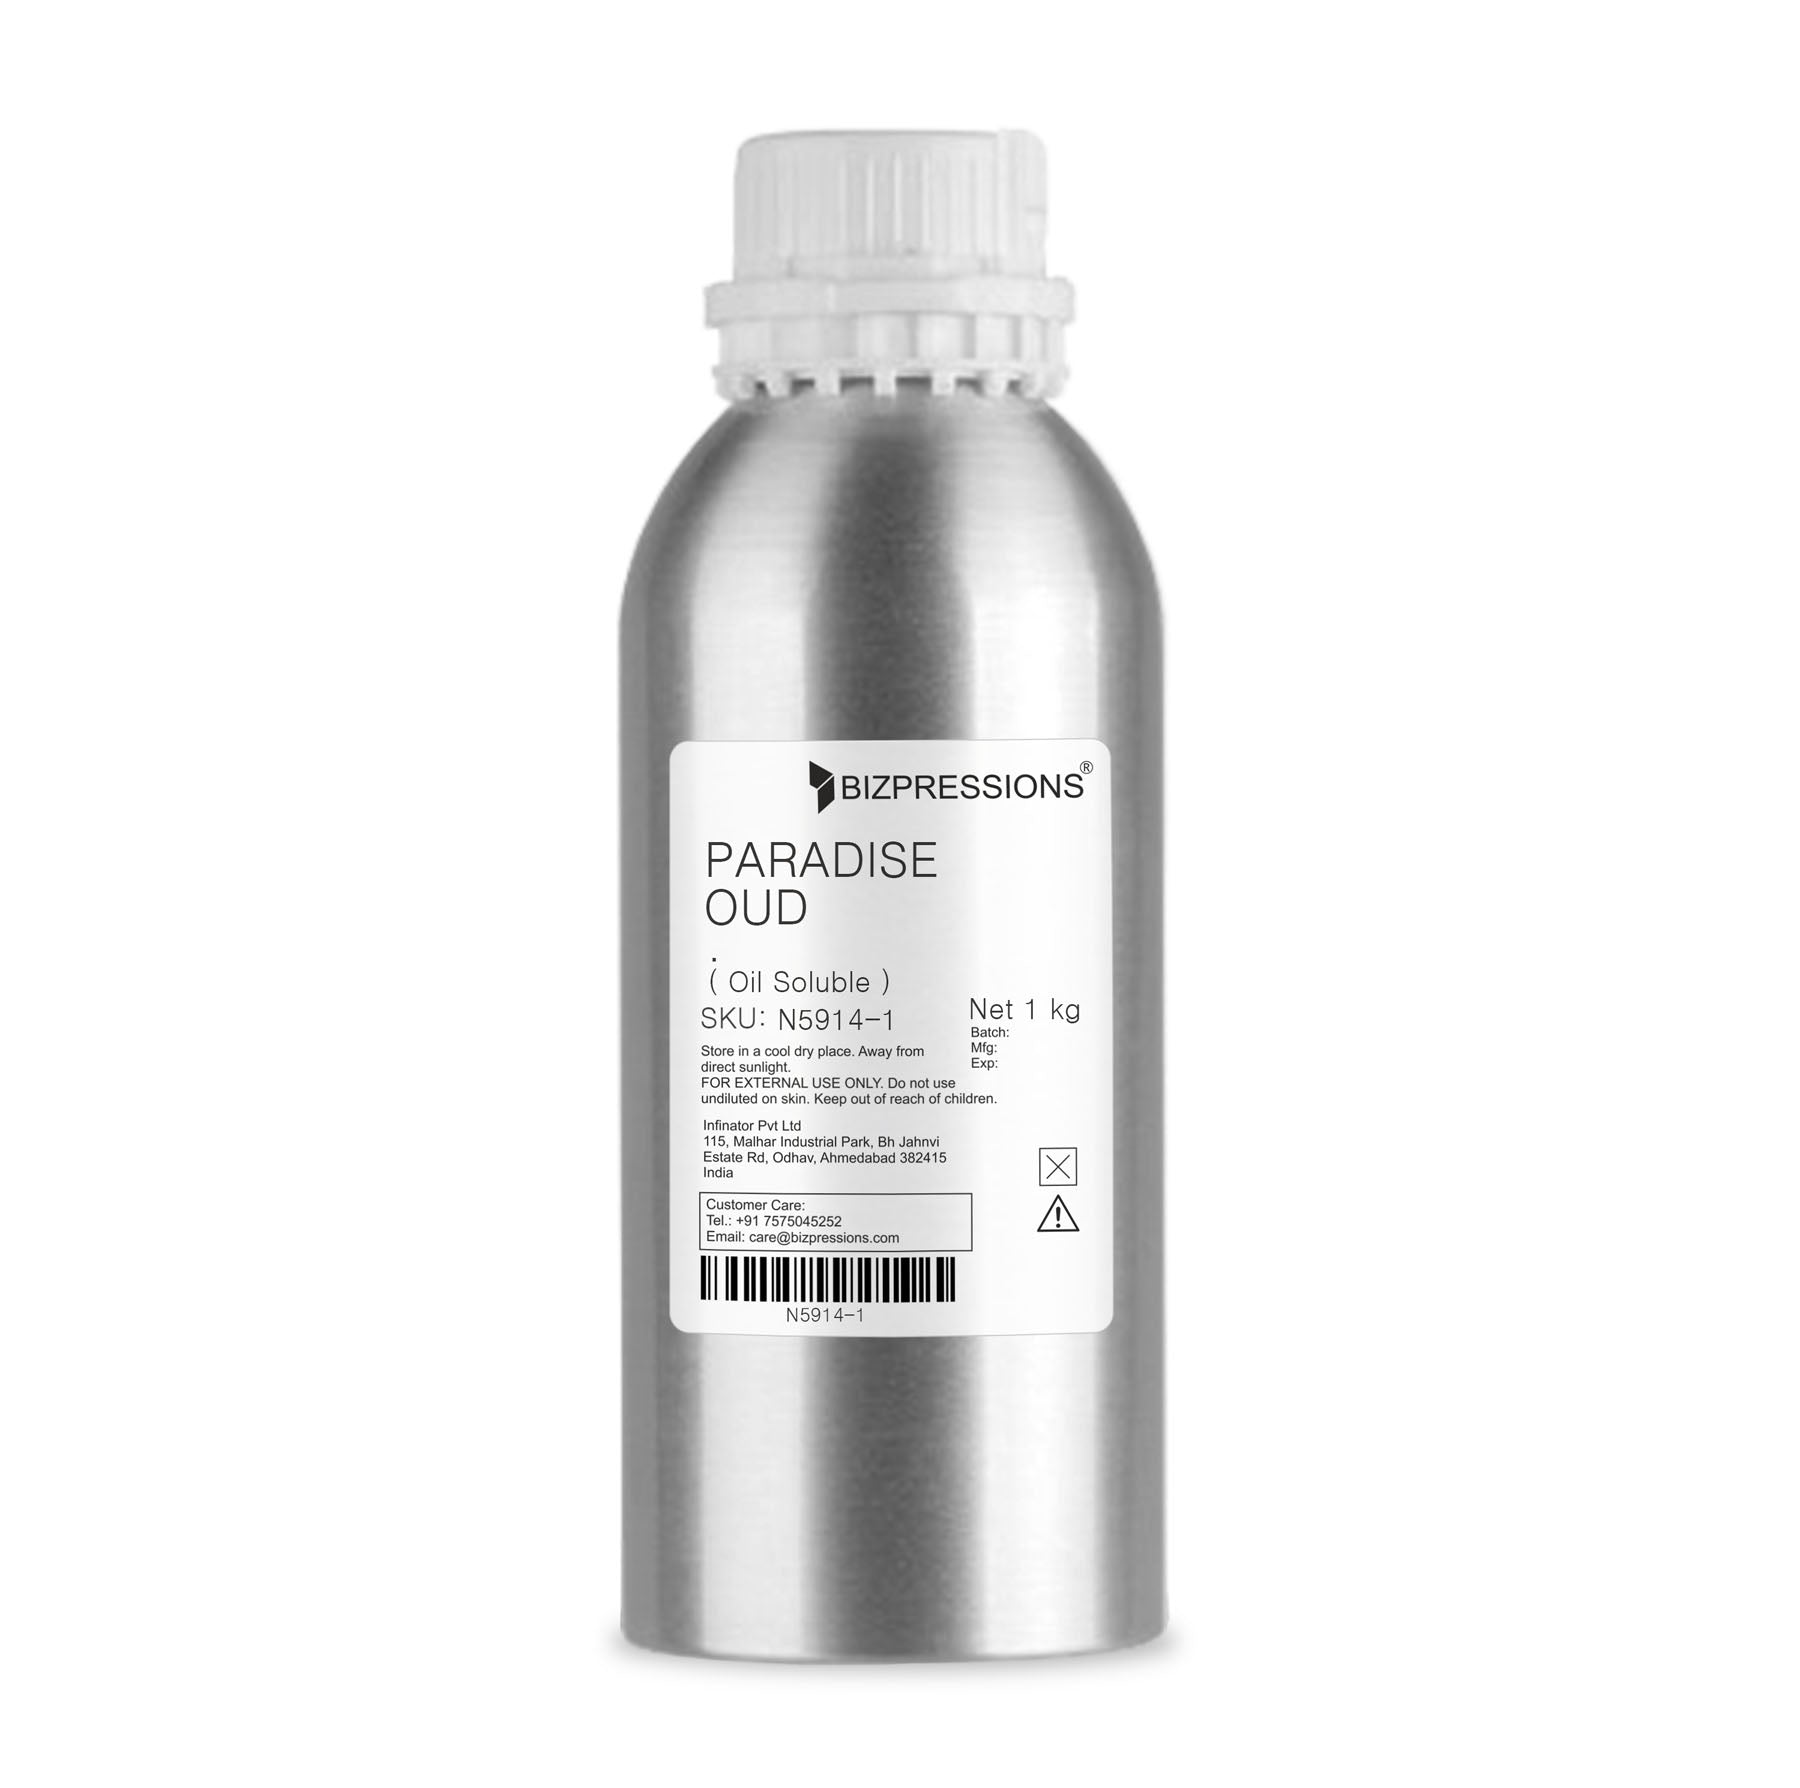 PARADISE OUD - Fragrance ( Oil Soluble ) - 1 kg